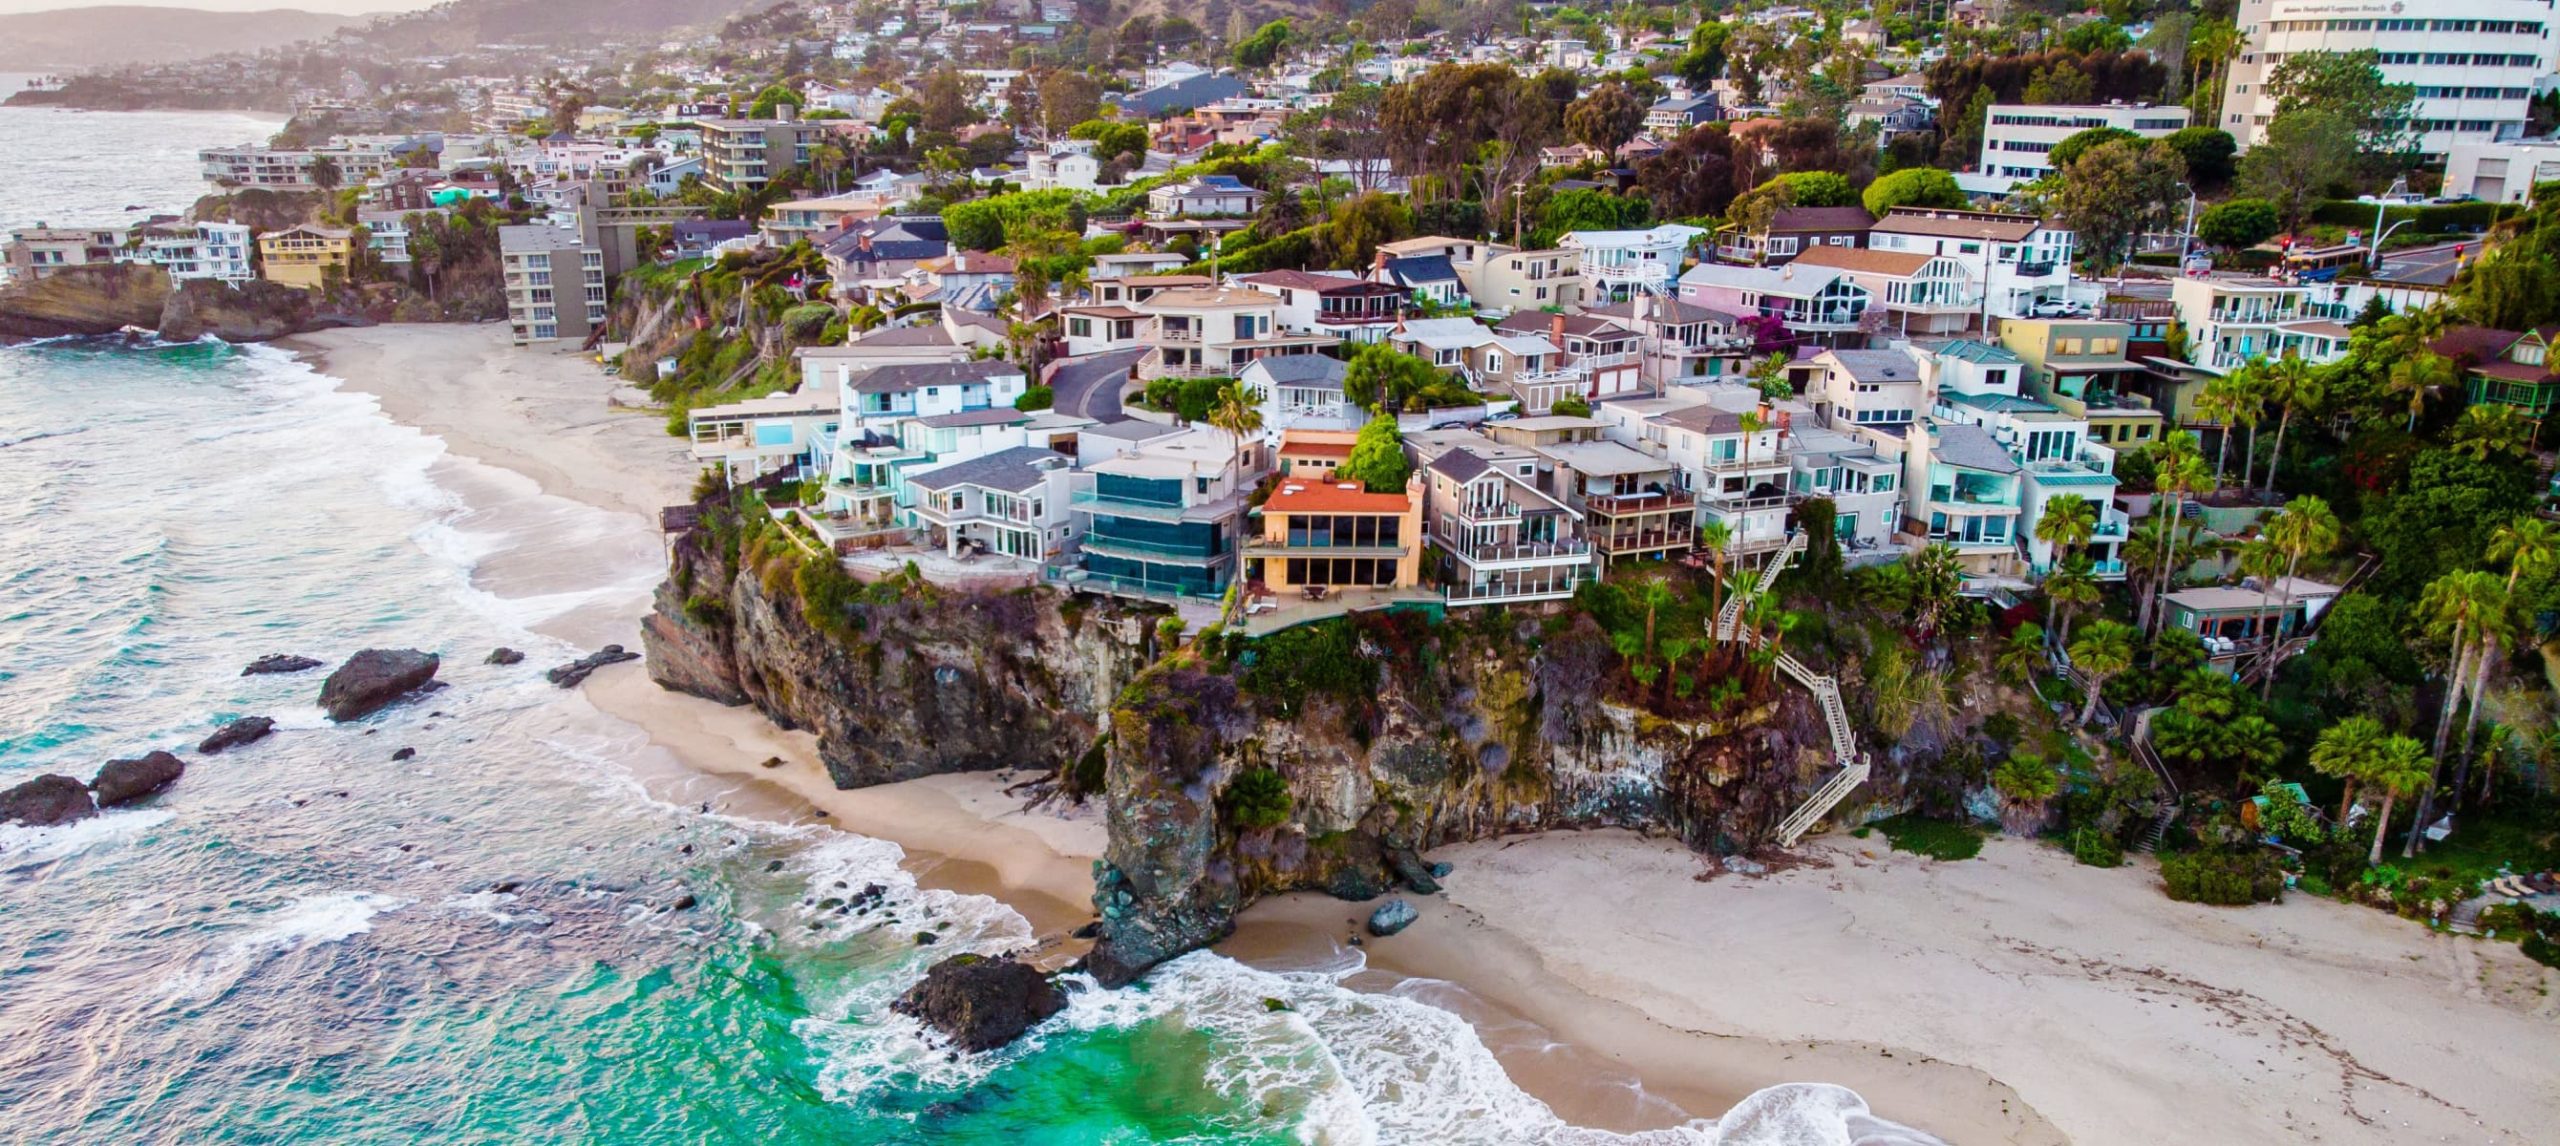 Aerial view of luxury buildings at the coast of Laguna Beach, California, USA.